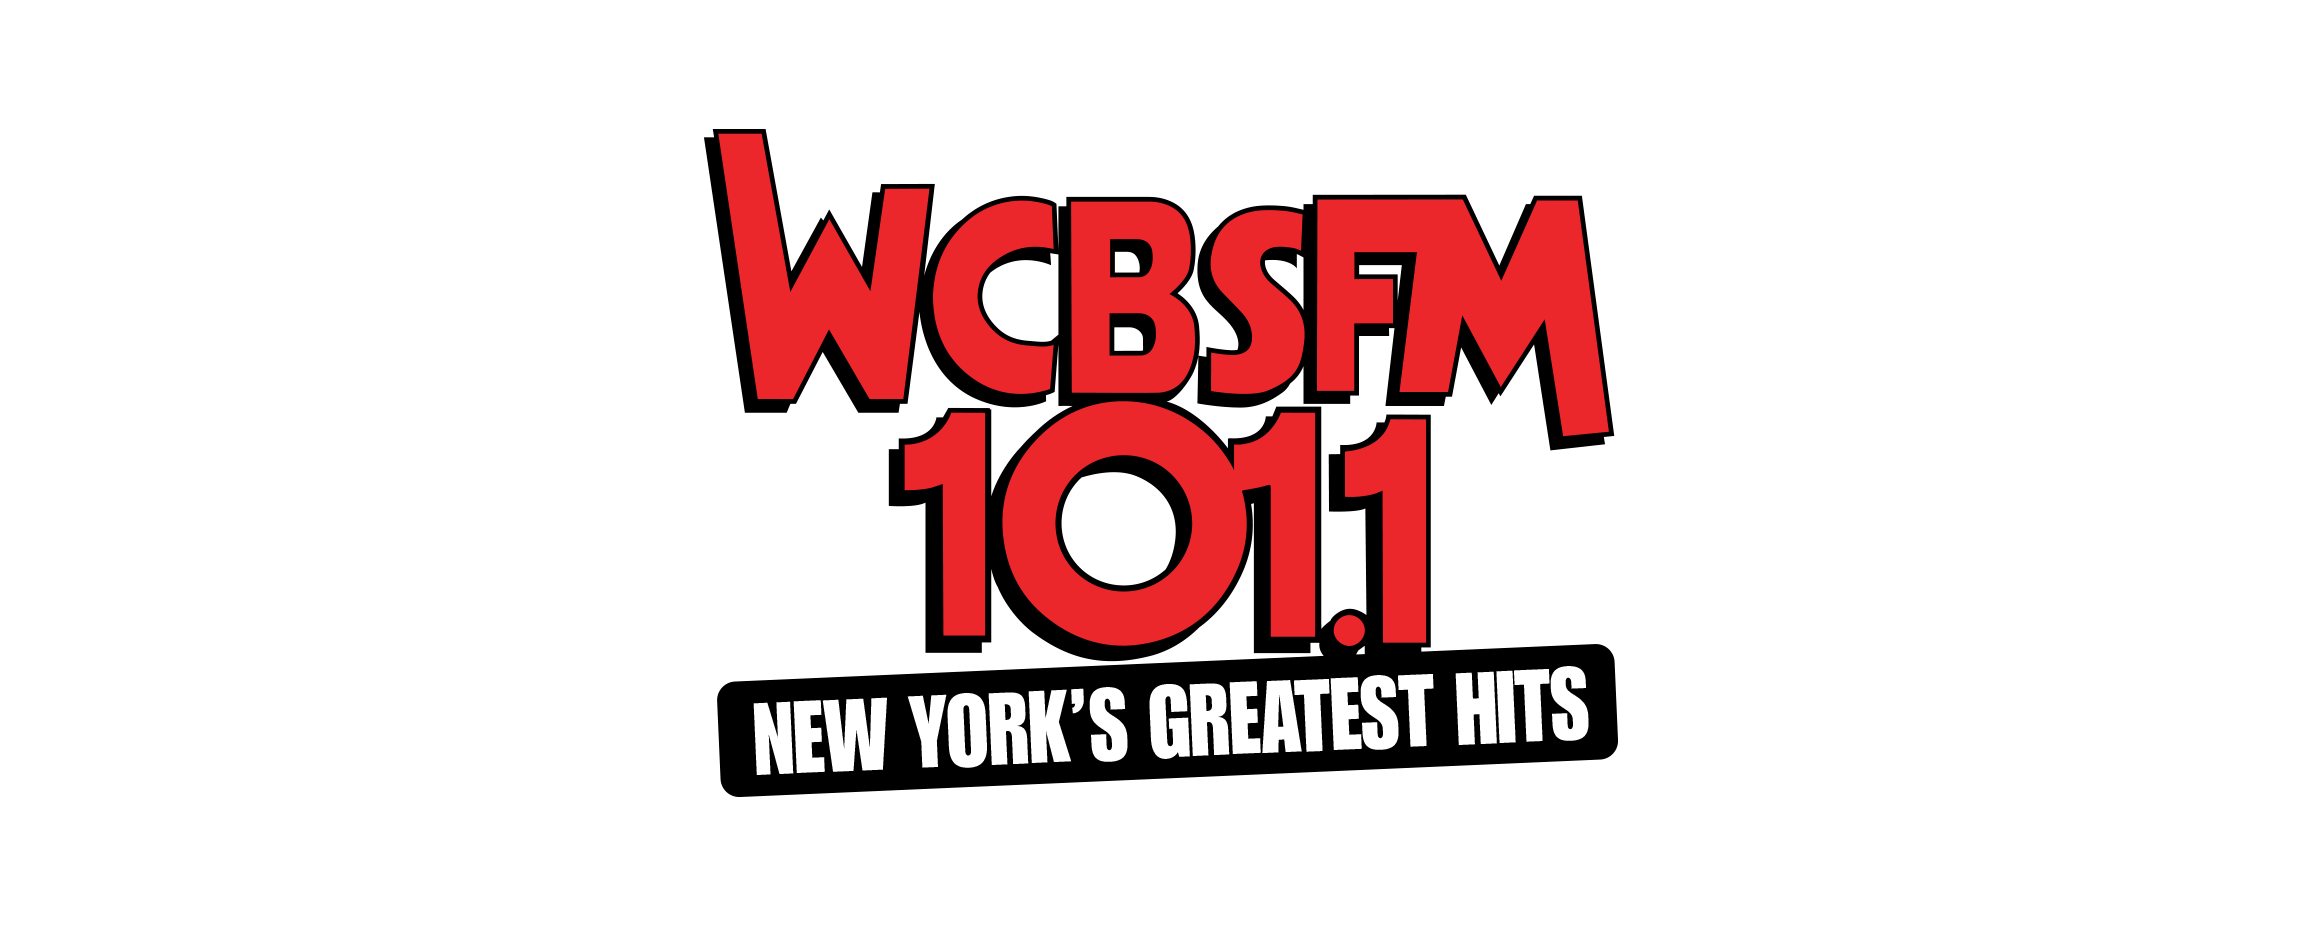 WCBS Logo - WCBS FM